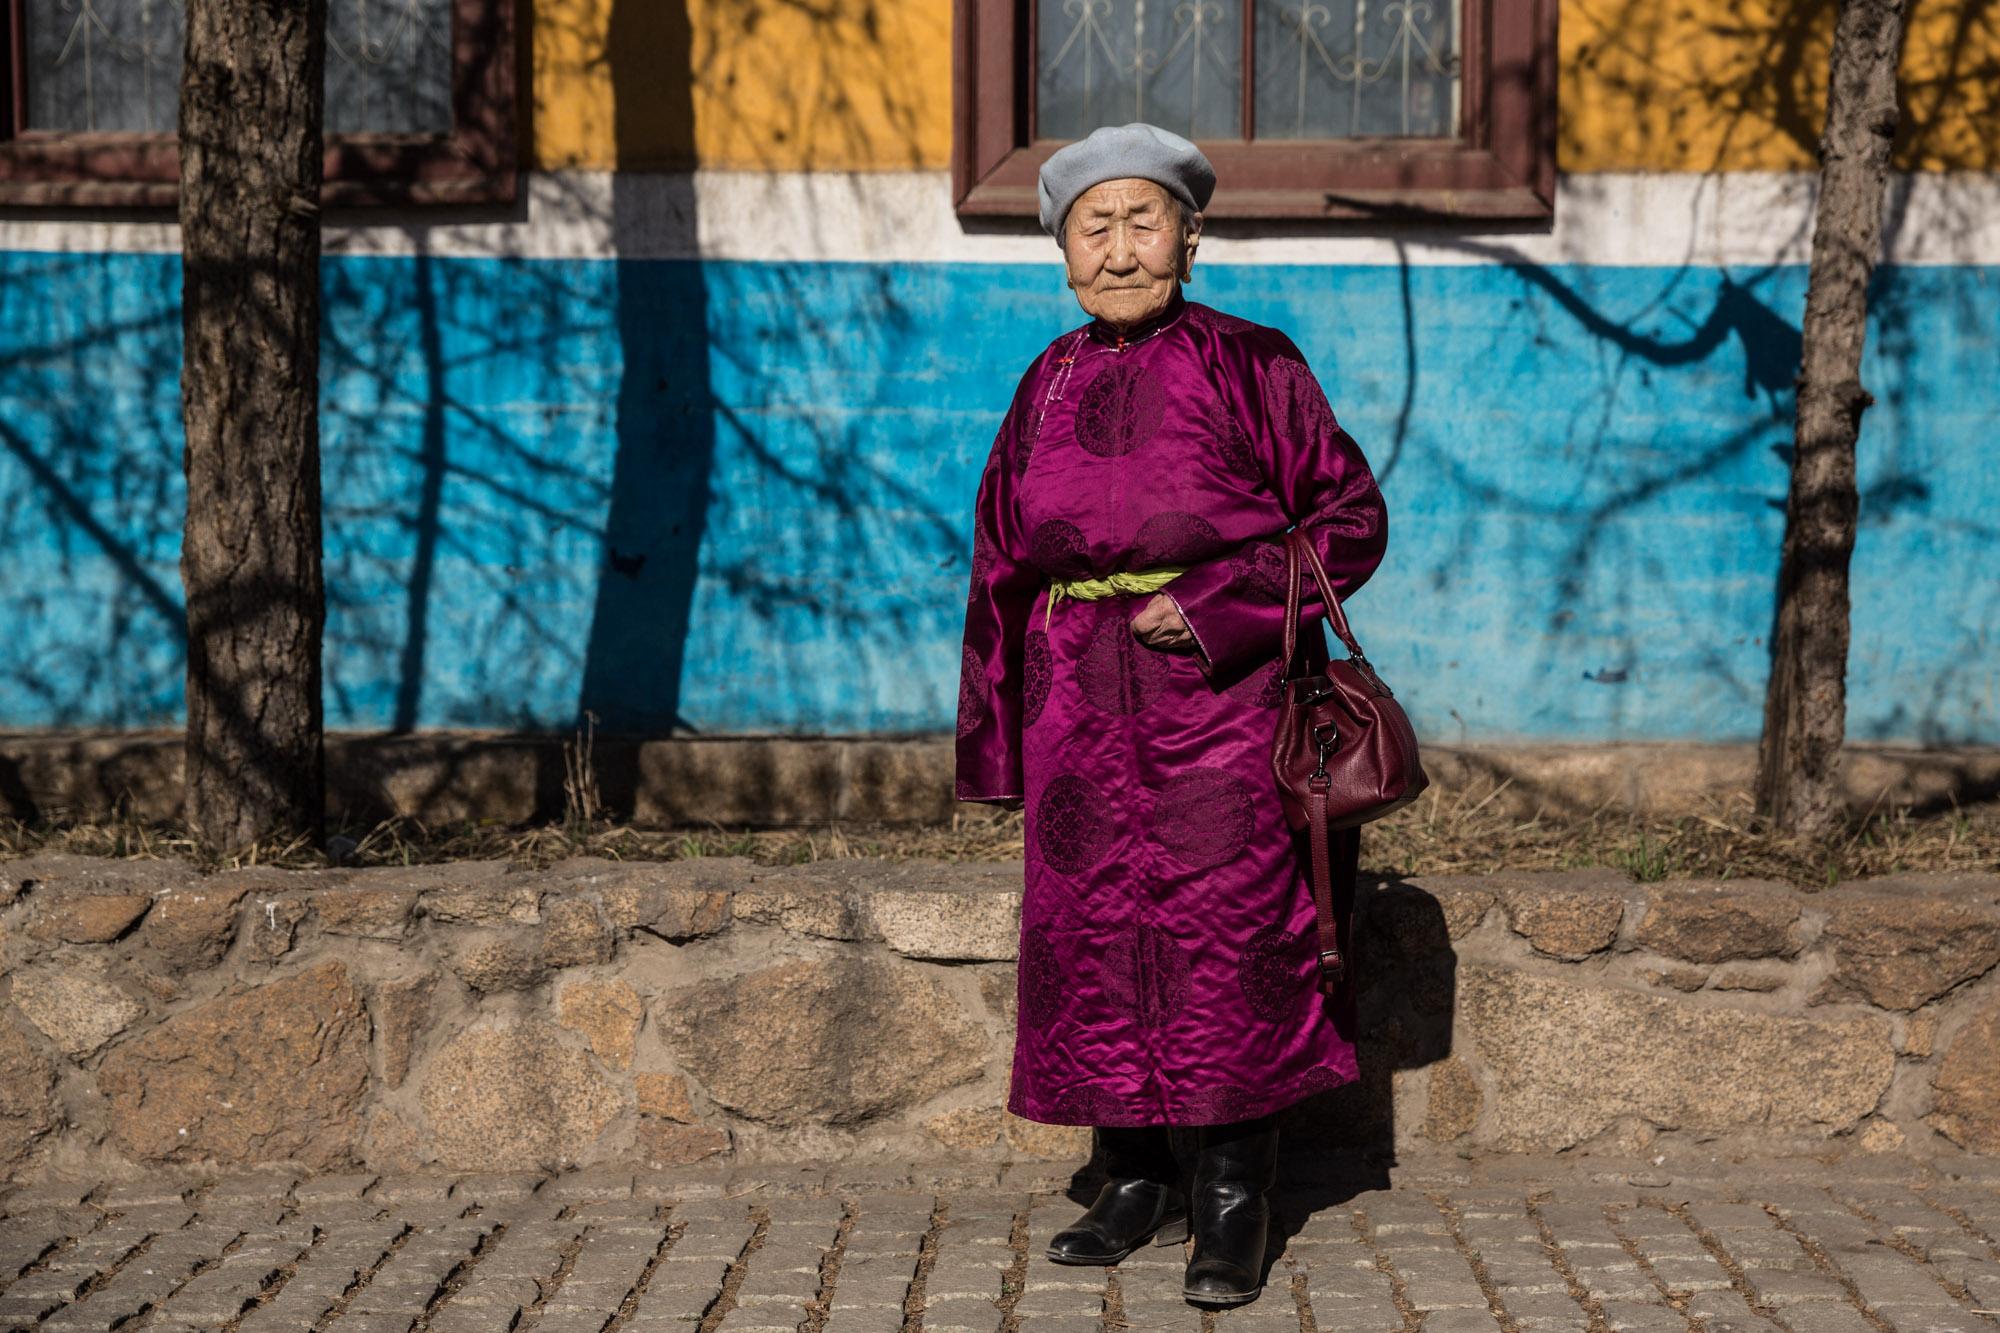 Portraits - Mongolian woman, Novartis Foundation, April 2017.